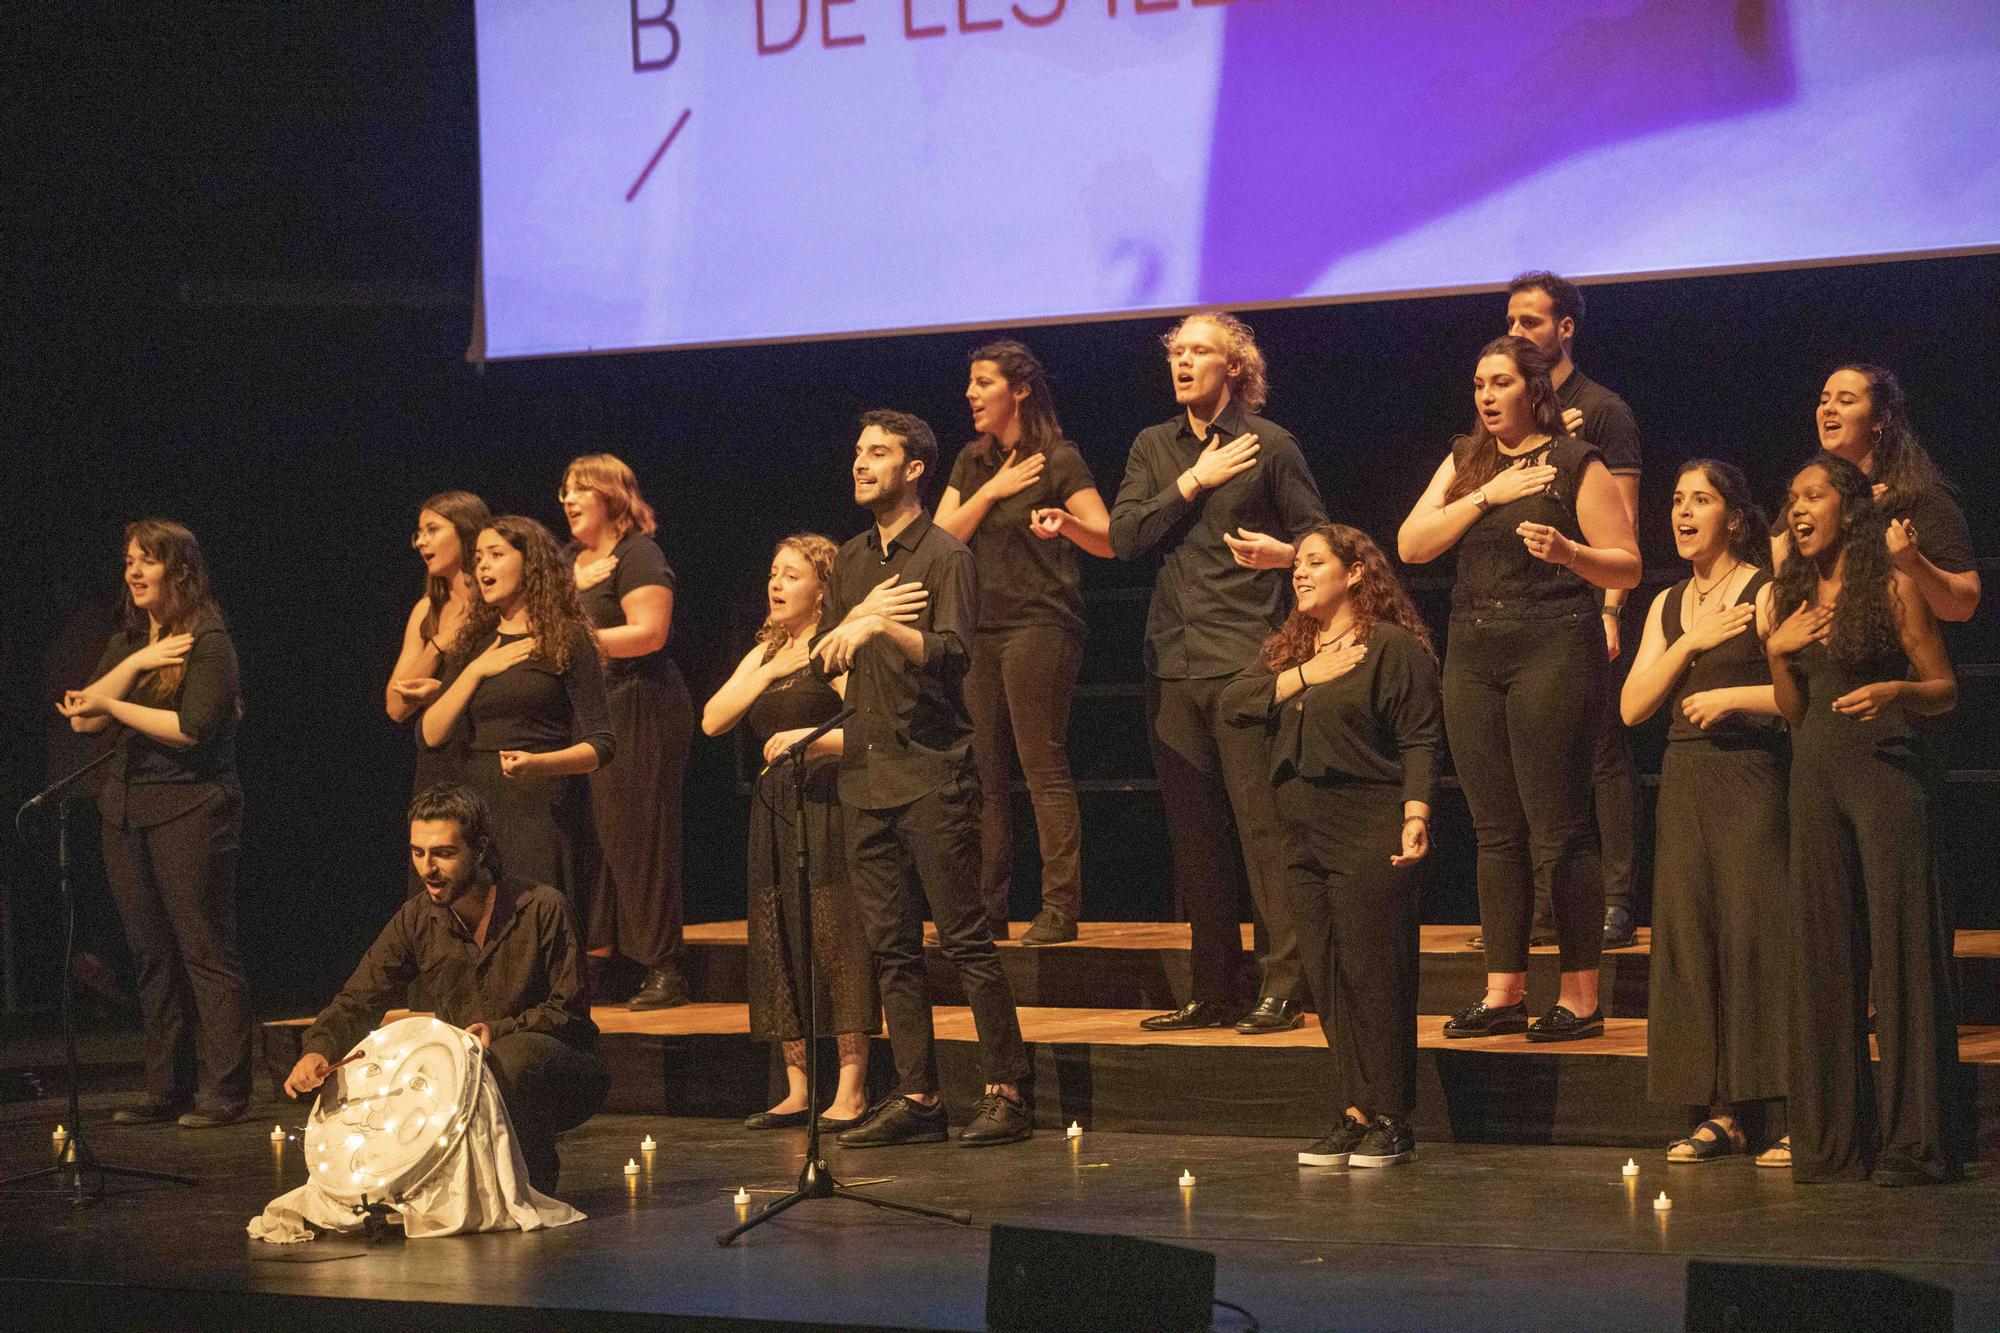 VI gala de la Salut balear celebrada en el Palau de Congressos de Palma